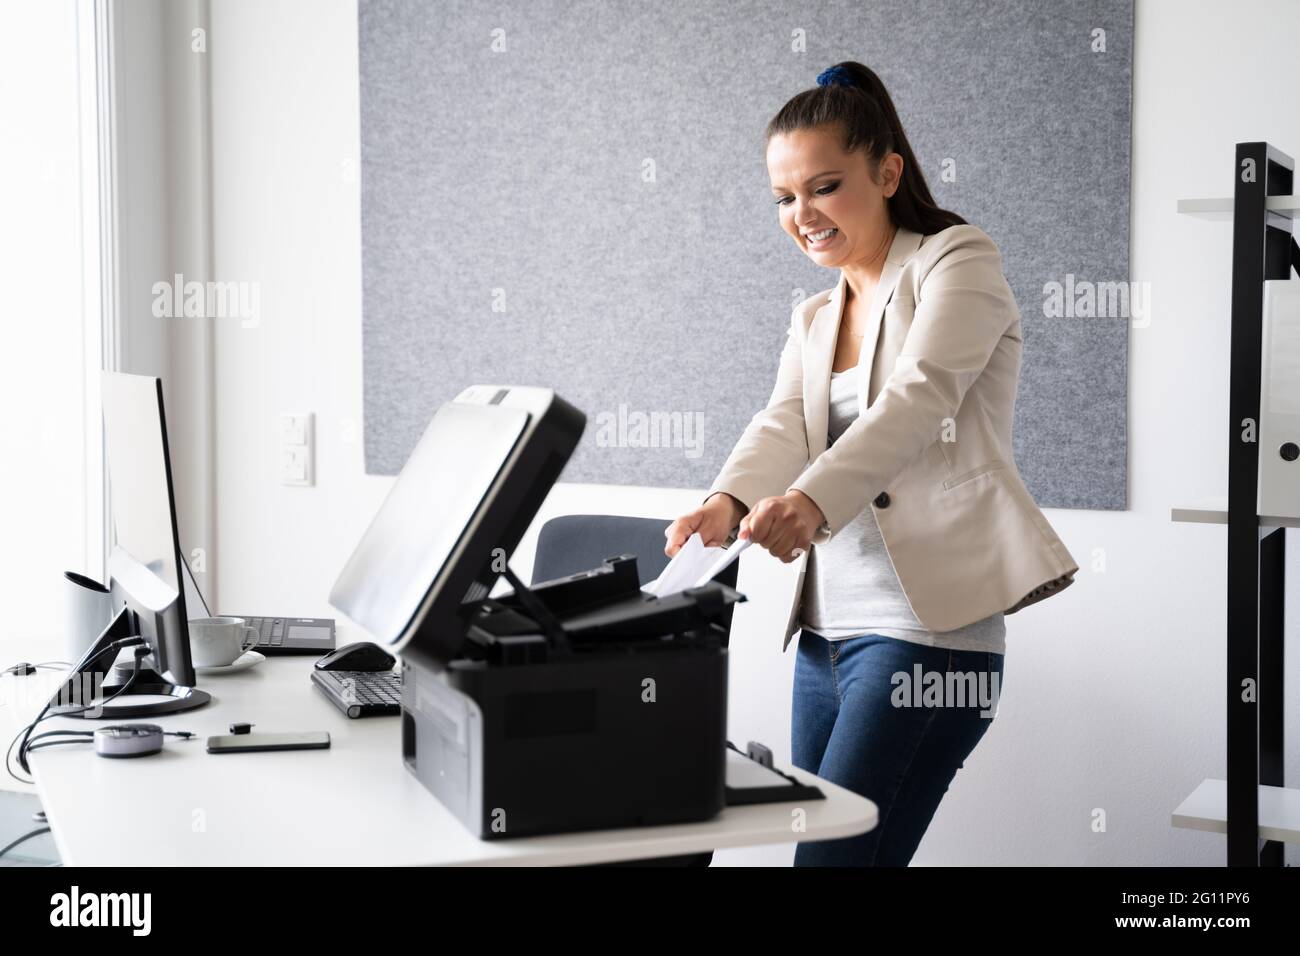 Broken Office Printer. Annoyed By Paper Jam Stock Photo